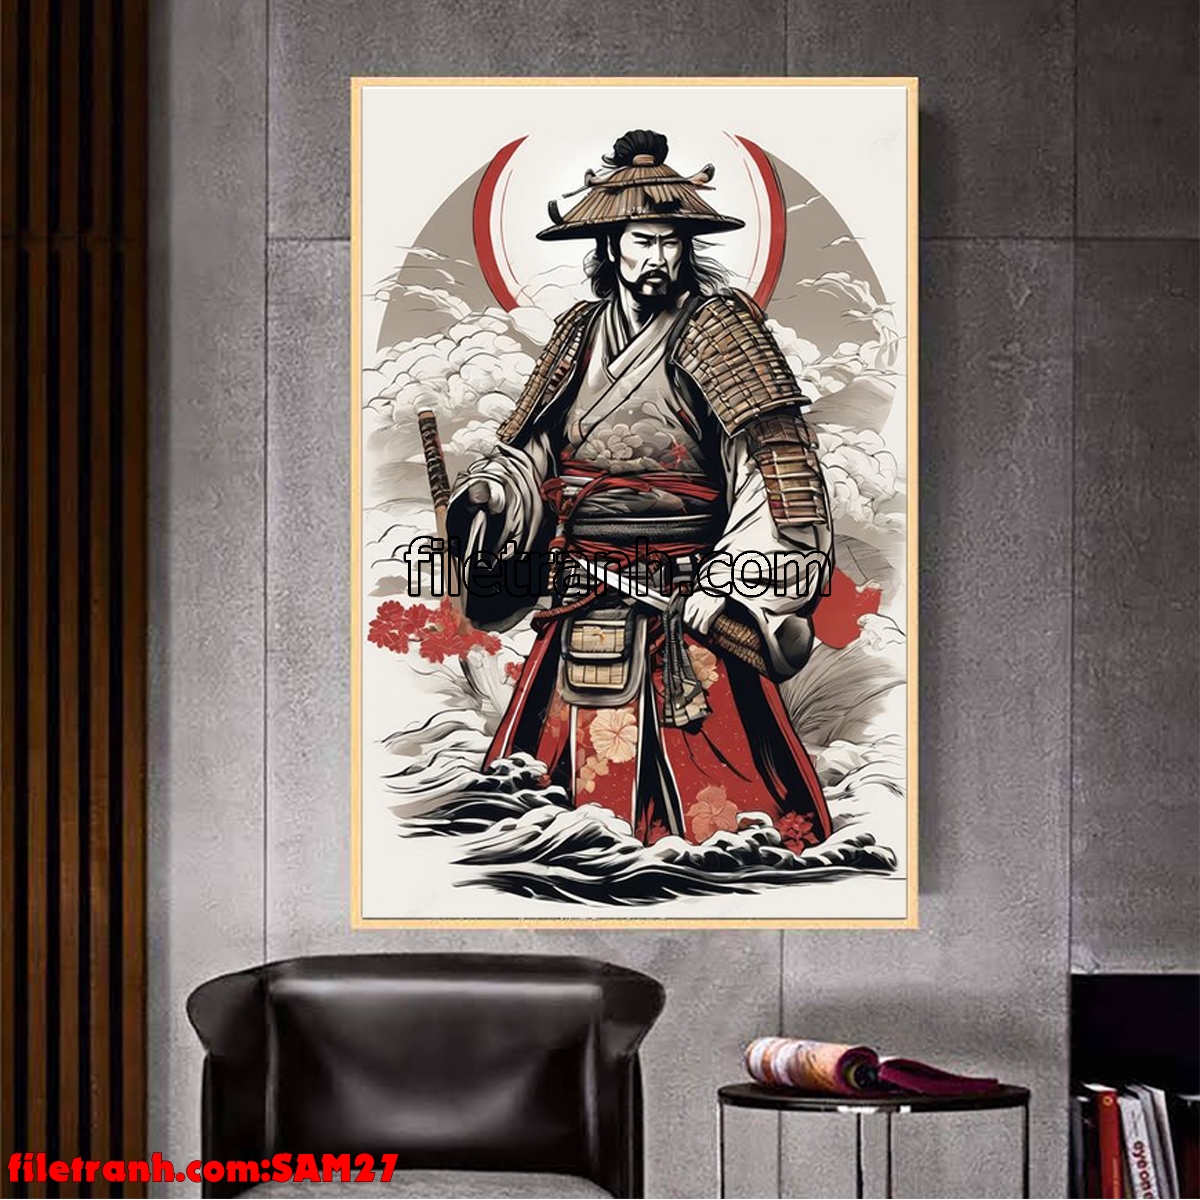 https://filetranh.com/tuong-nen/file-tranh-samurai-vo-si-nhat-ban-sam27.html